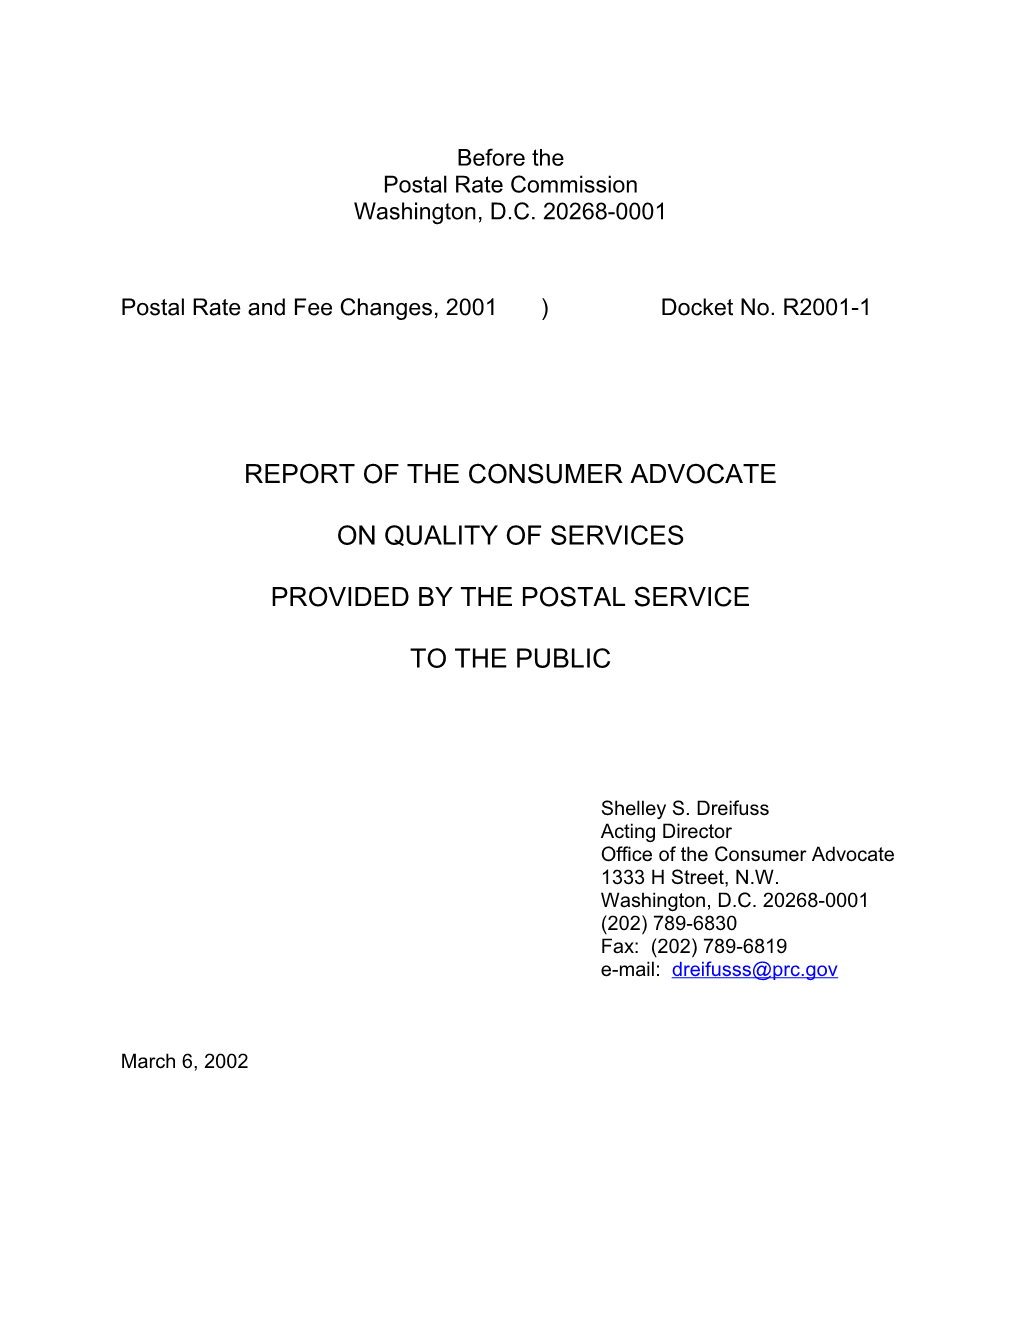 Report of the Consumer Advocate